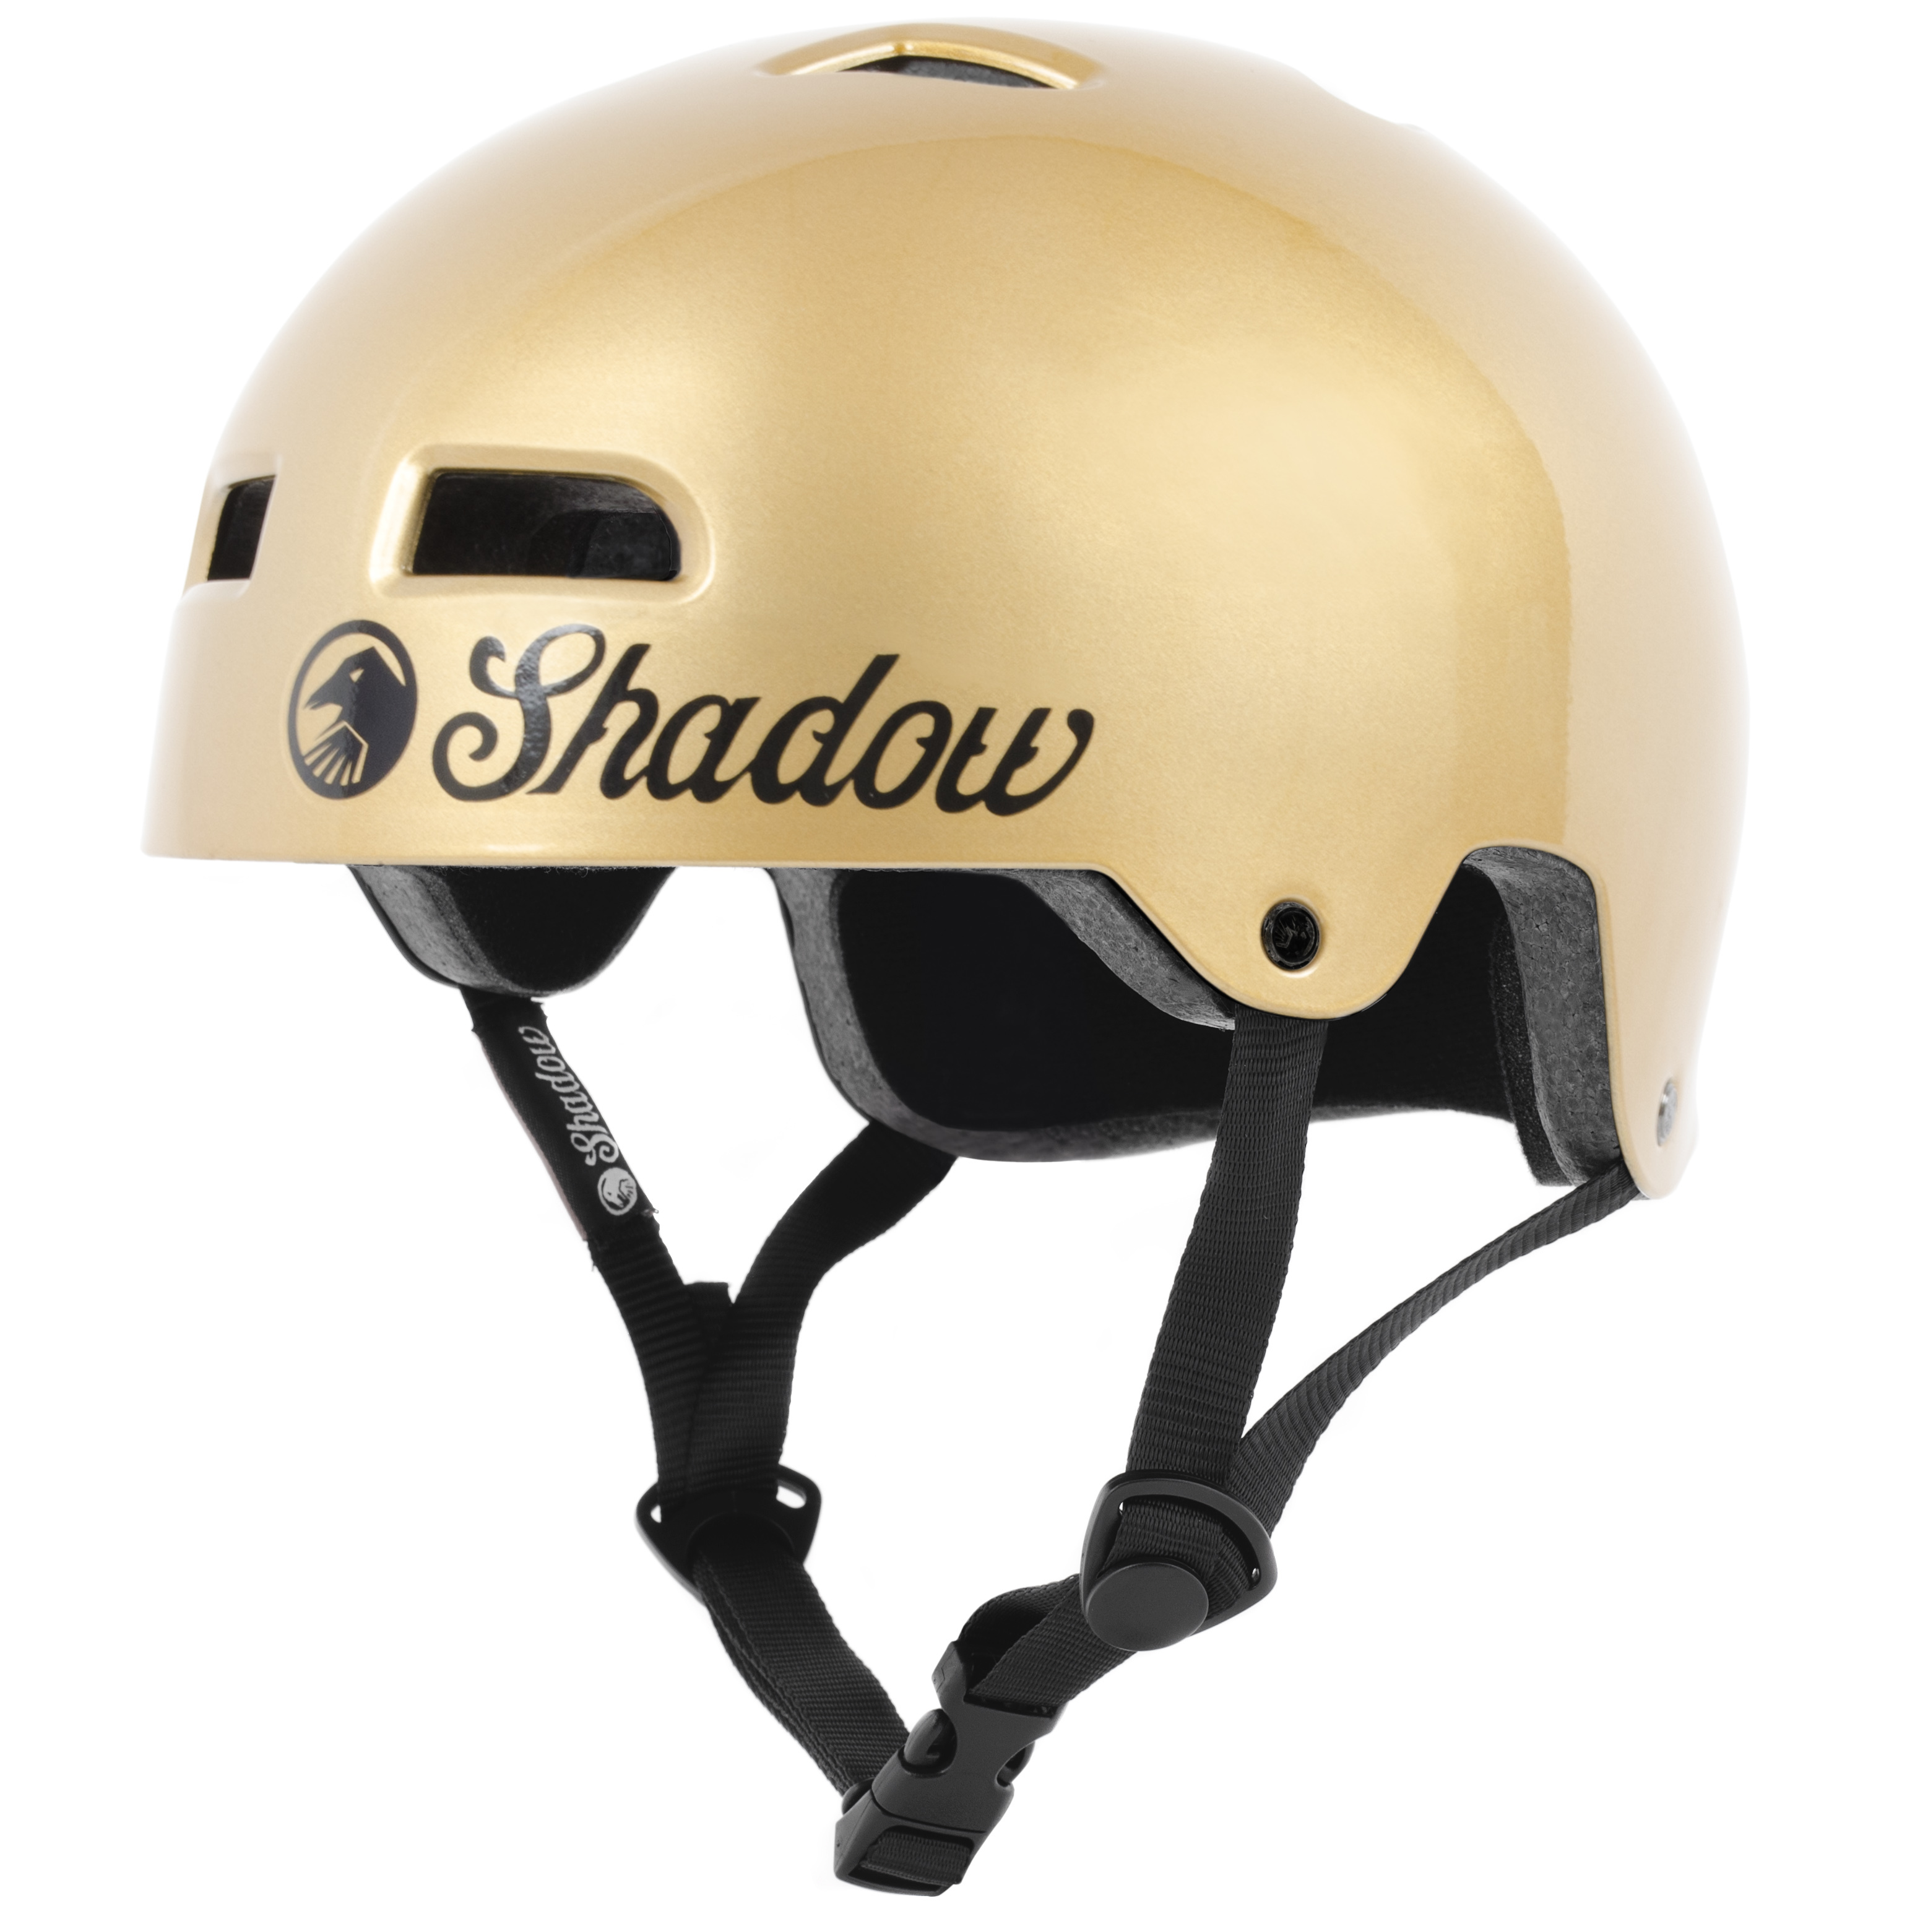 Shadow Classic Helmet (Copper)